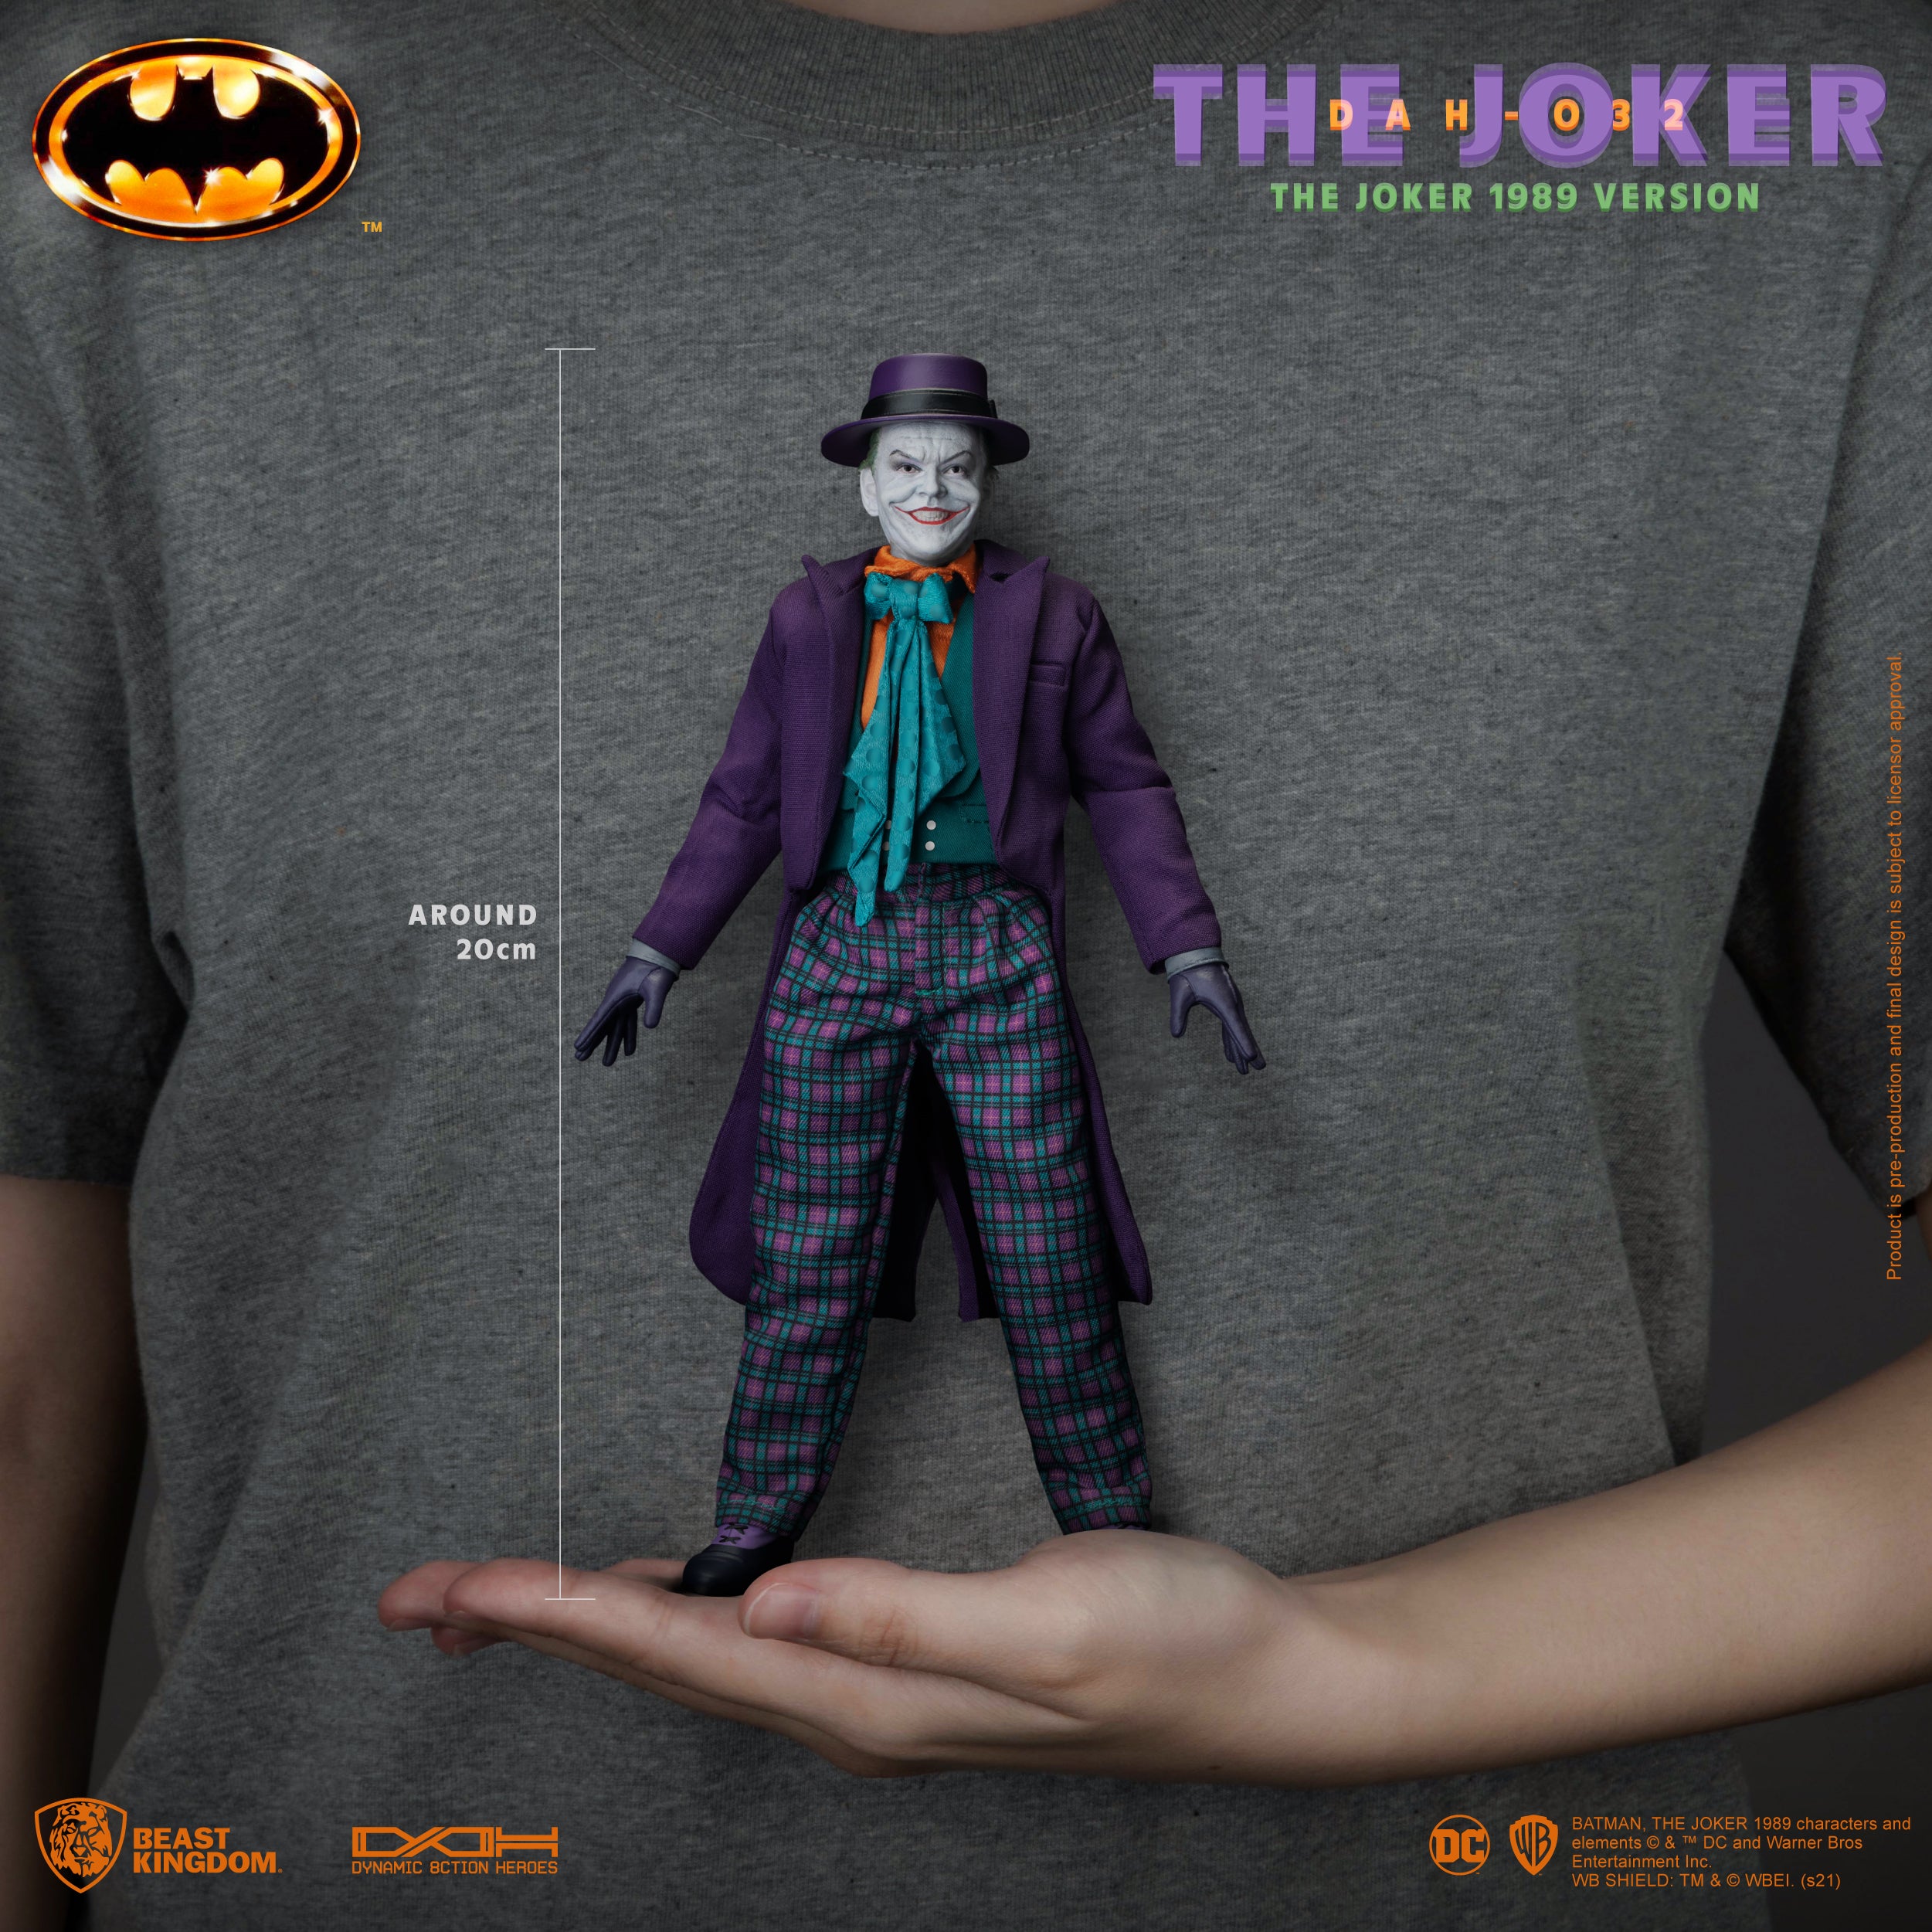 UD Replicas Joker Goon Themed Leather Bomber Jacket Size: Medium | eBay